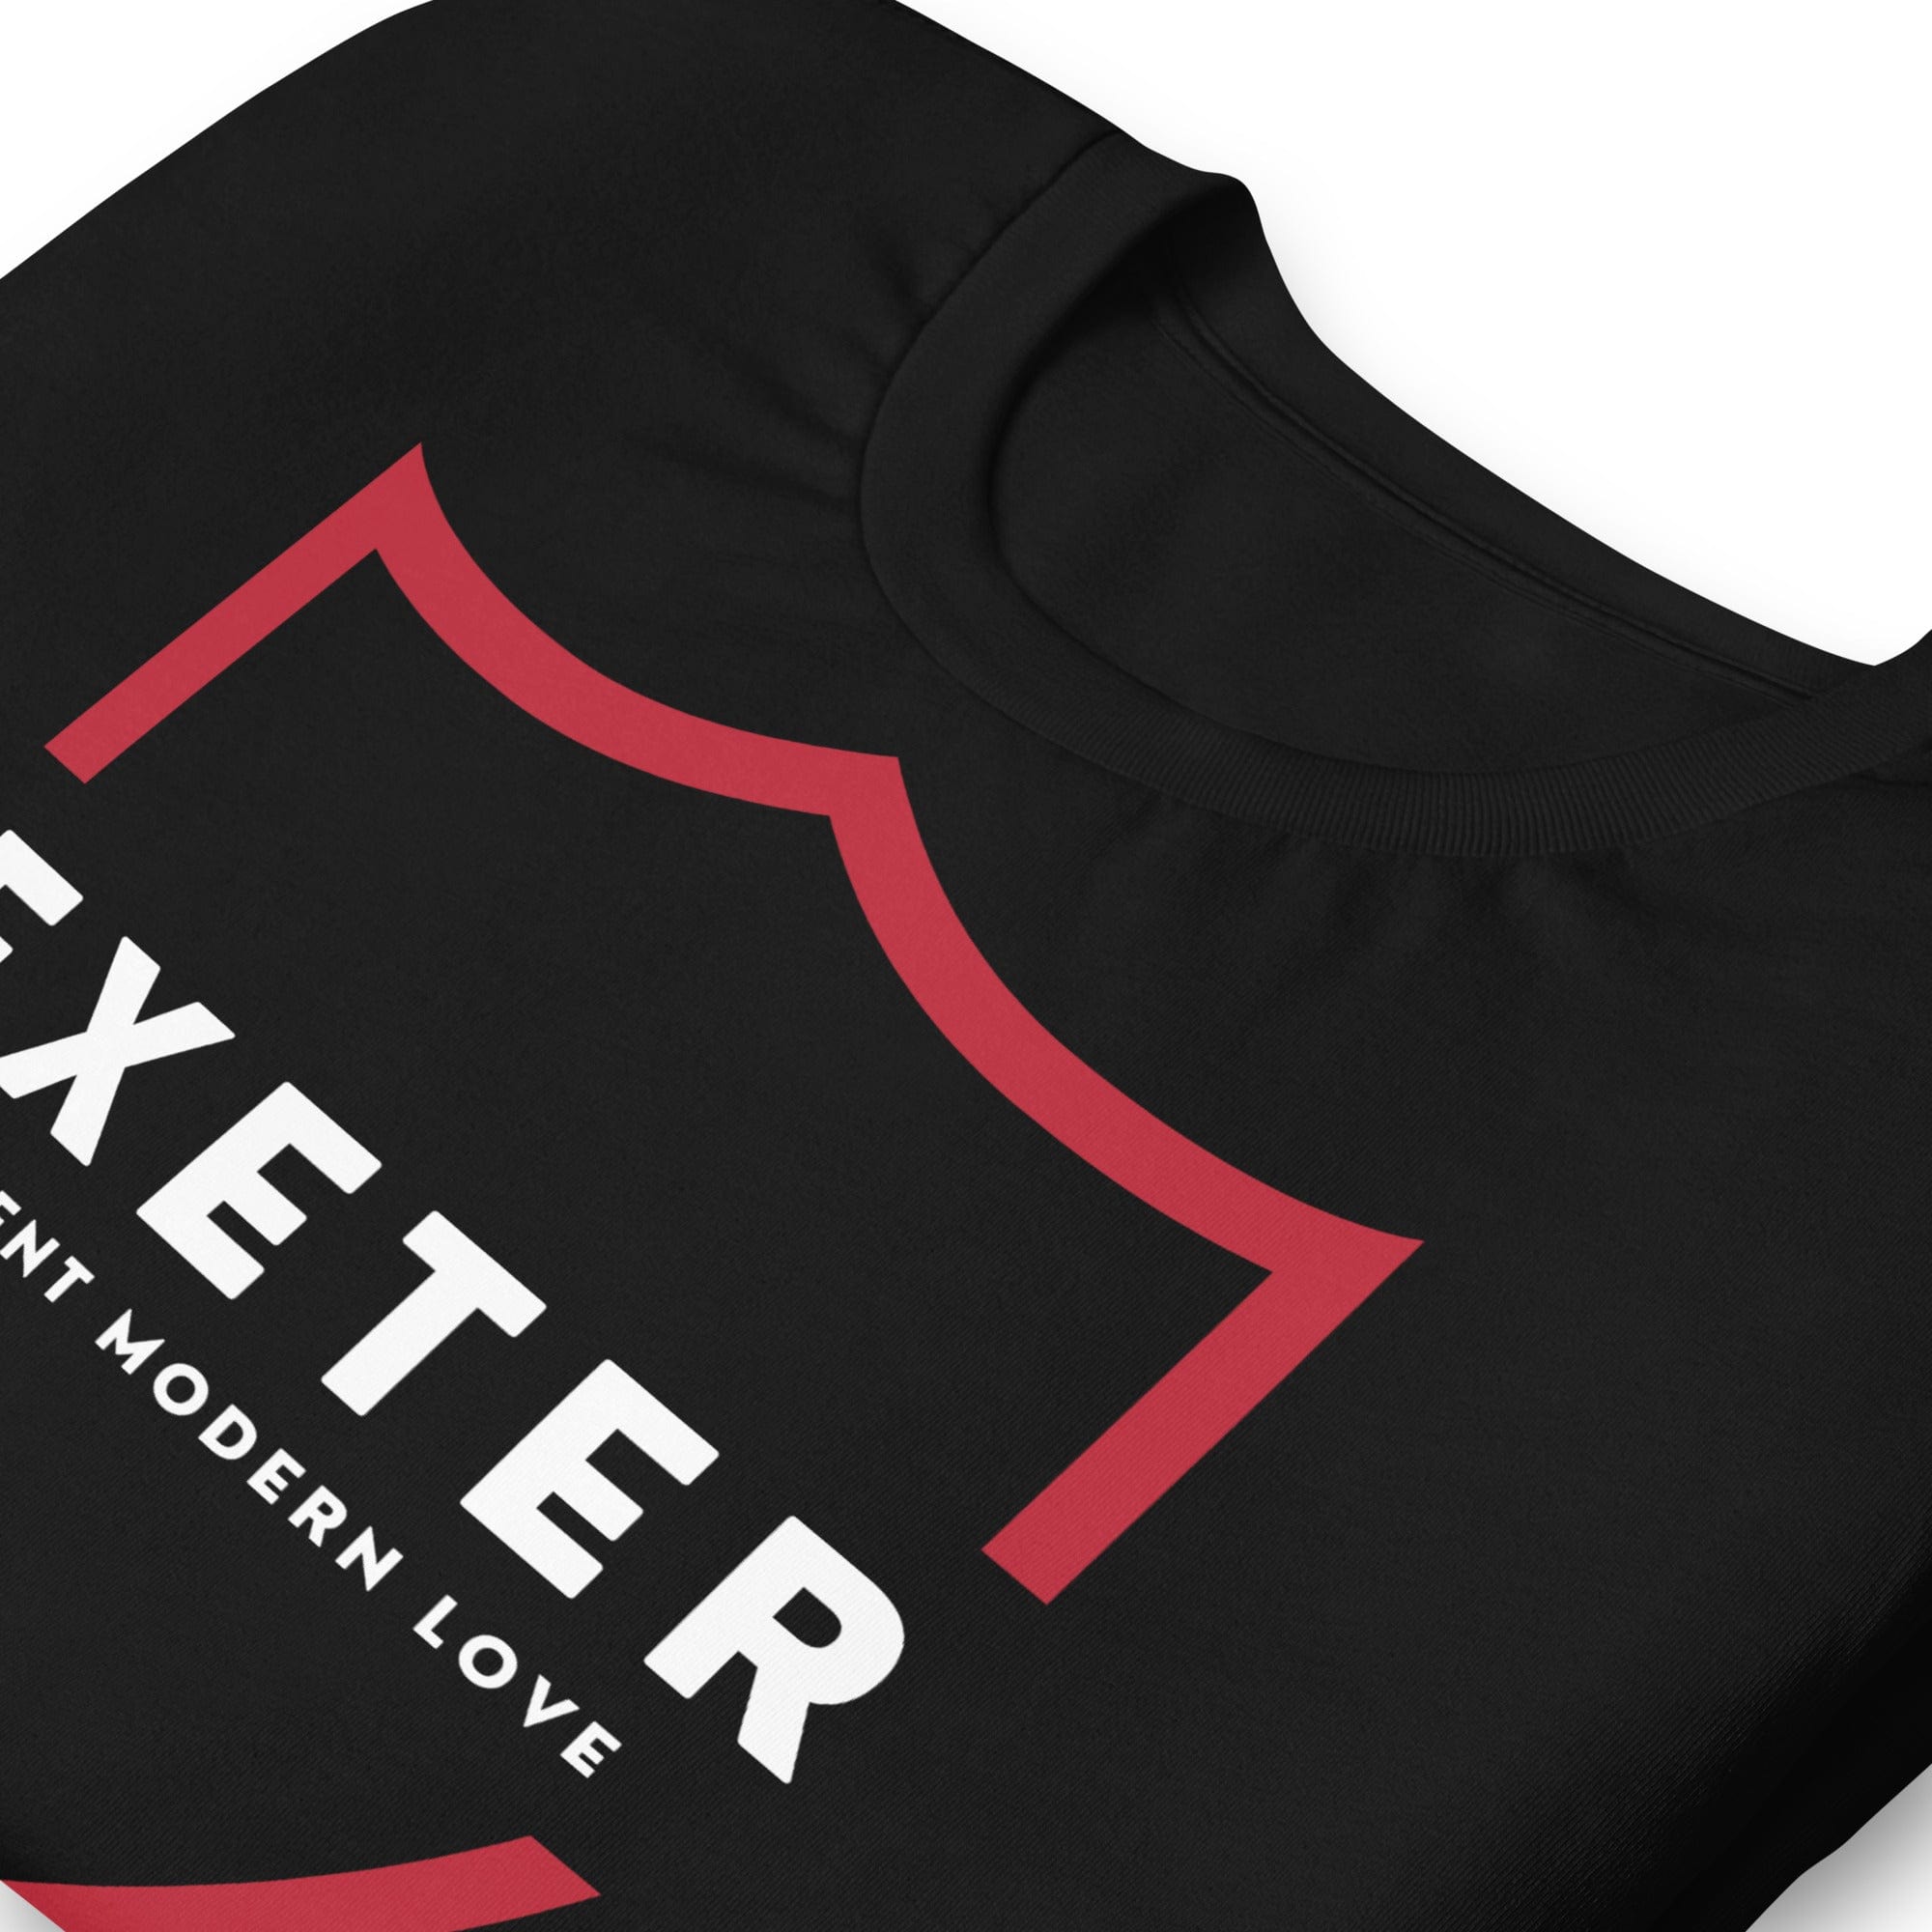 Exeter Ancient Modern Love T-shirt Shirts & Tops Jolly & Goode